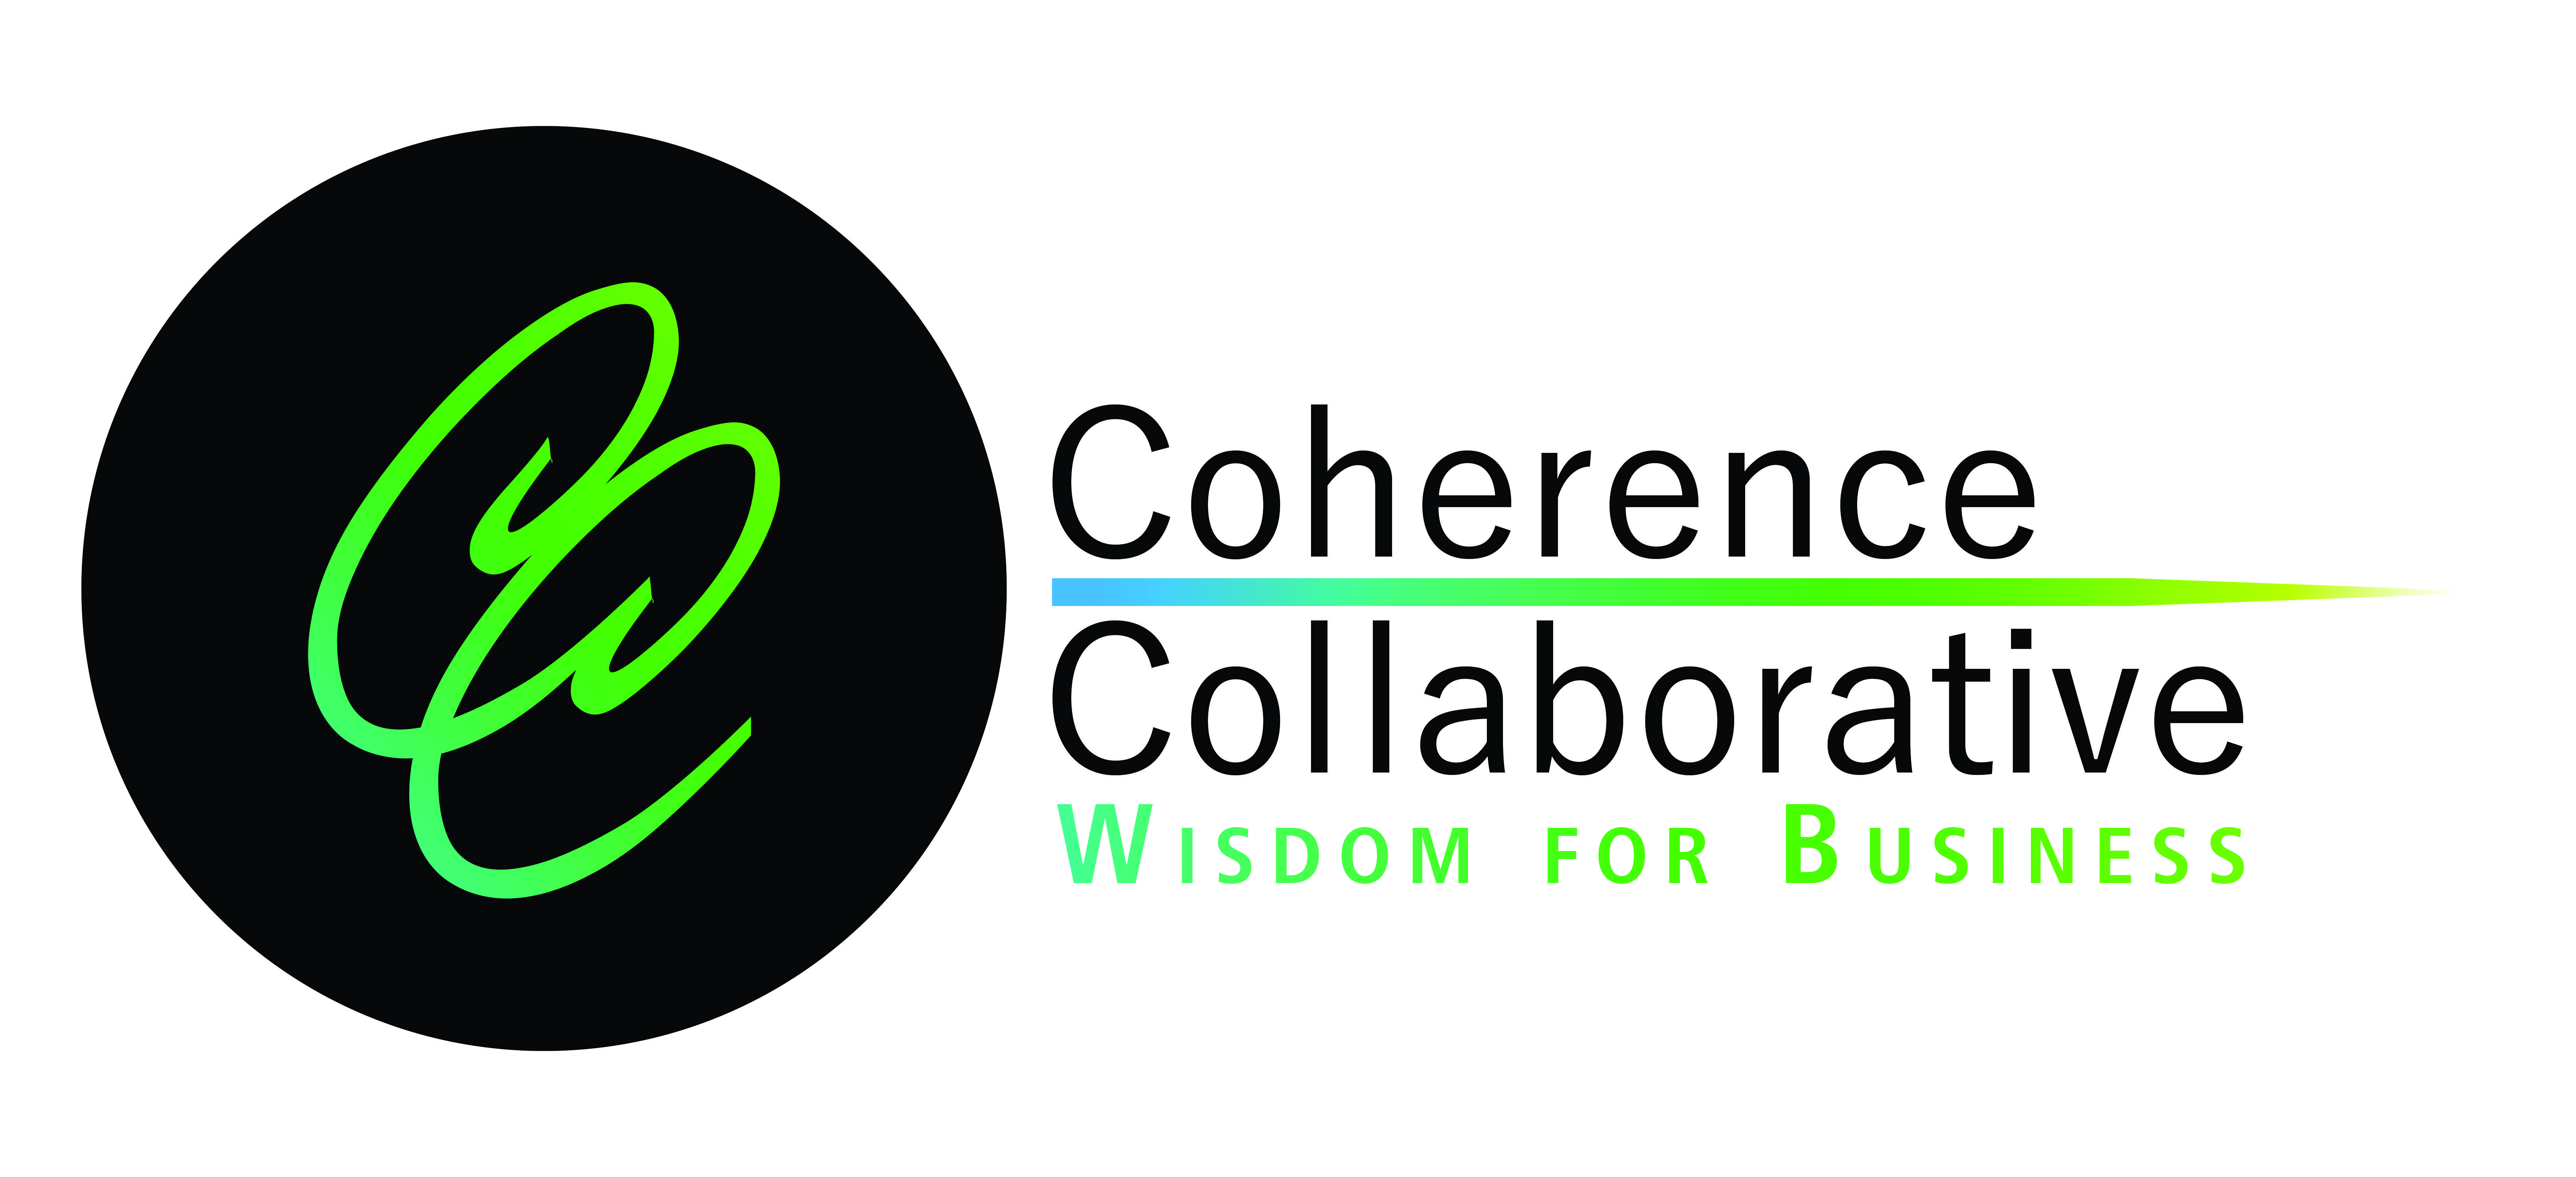 Coherence Collaborative logo